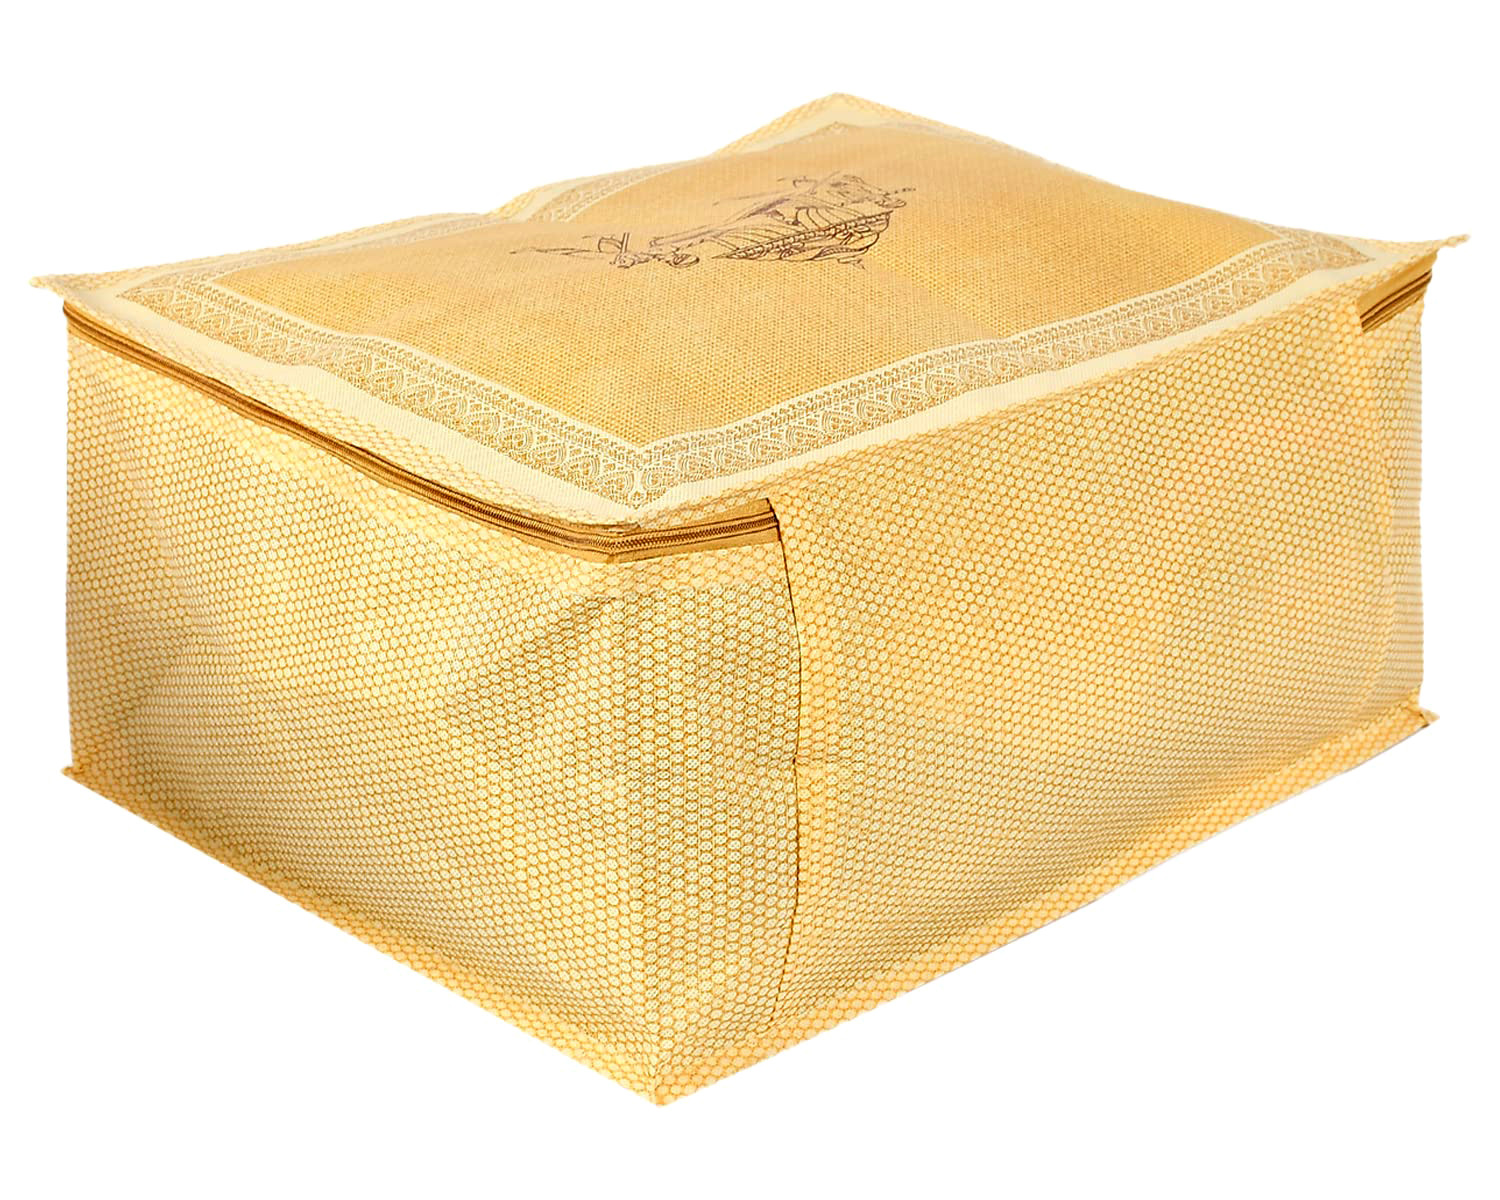 Kuber Industries Doli Printed Non-woven Foldable Underbed/Storage Bag/Wardrobe Organizer (Gold) 54KM4294